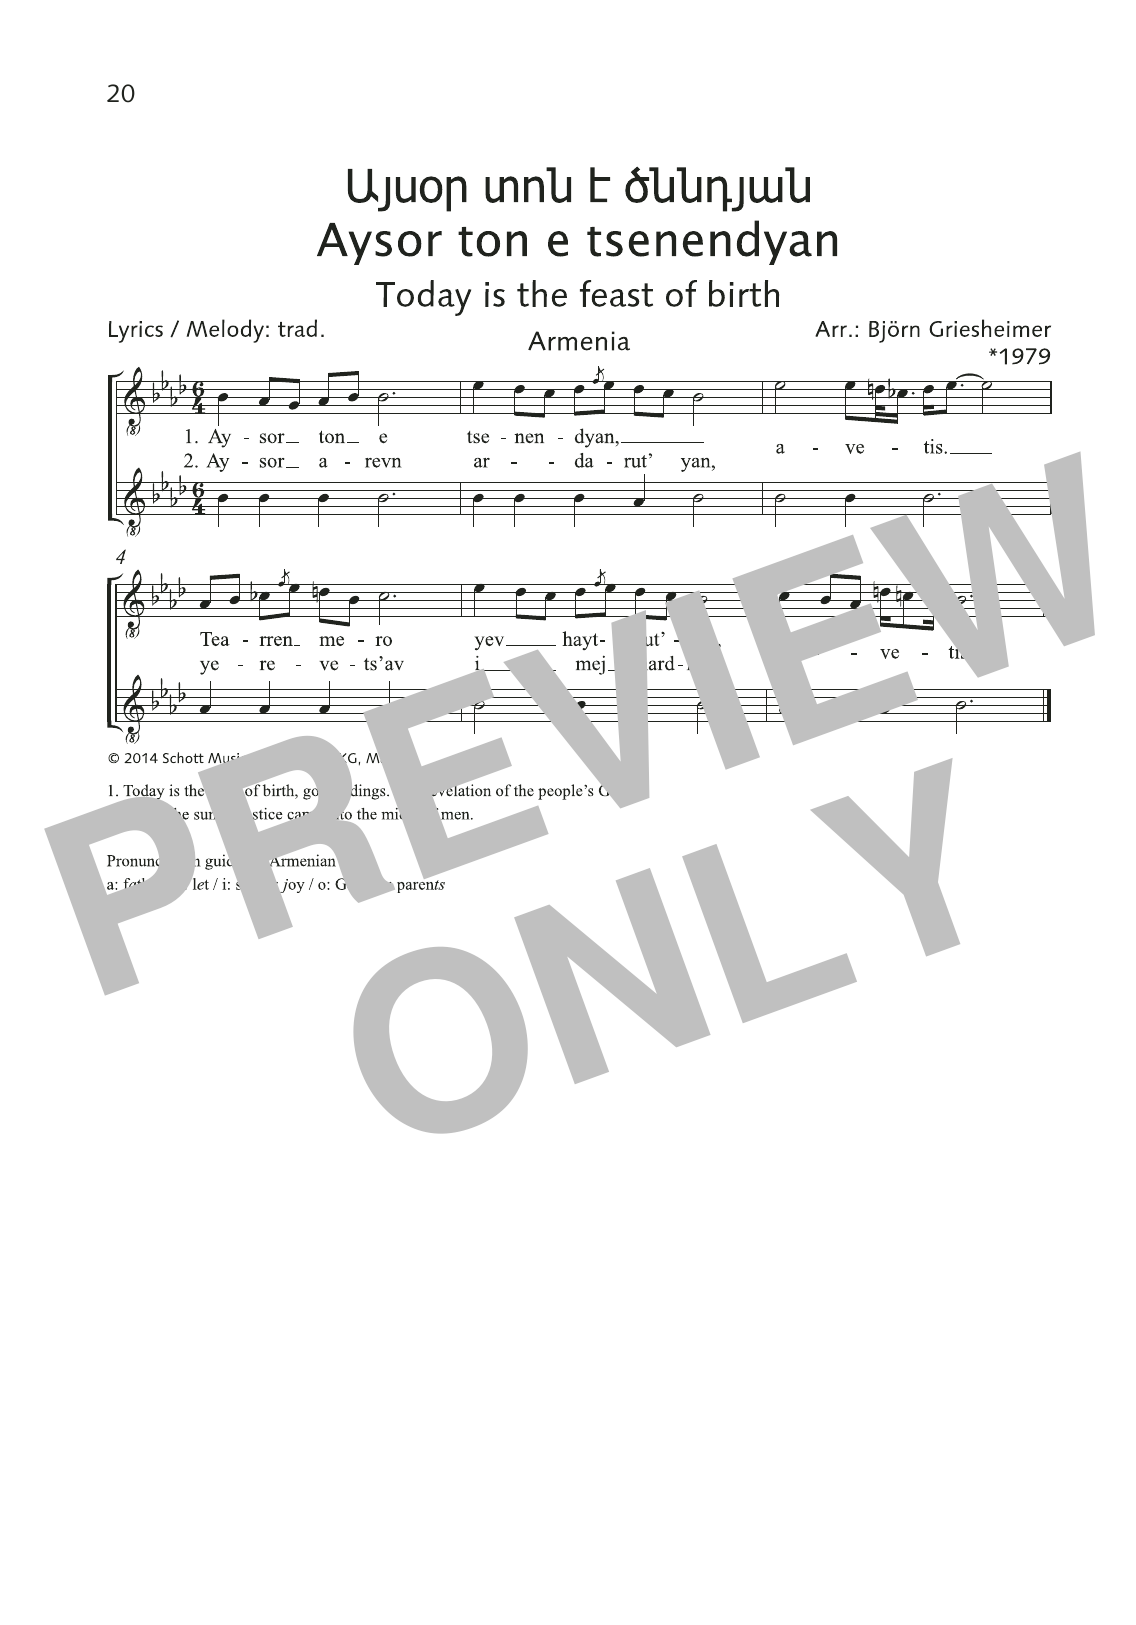 Download Björn Griesheimer Aysor ton e tsenendyan Sheet Music and learn how to play Choir PDF digital score in minutes